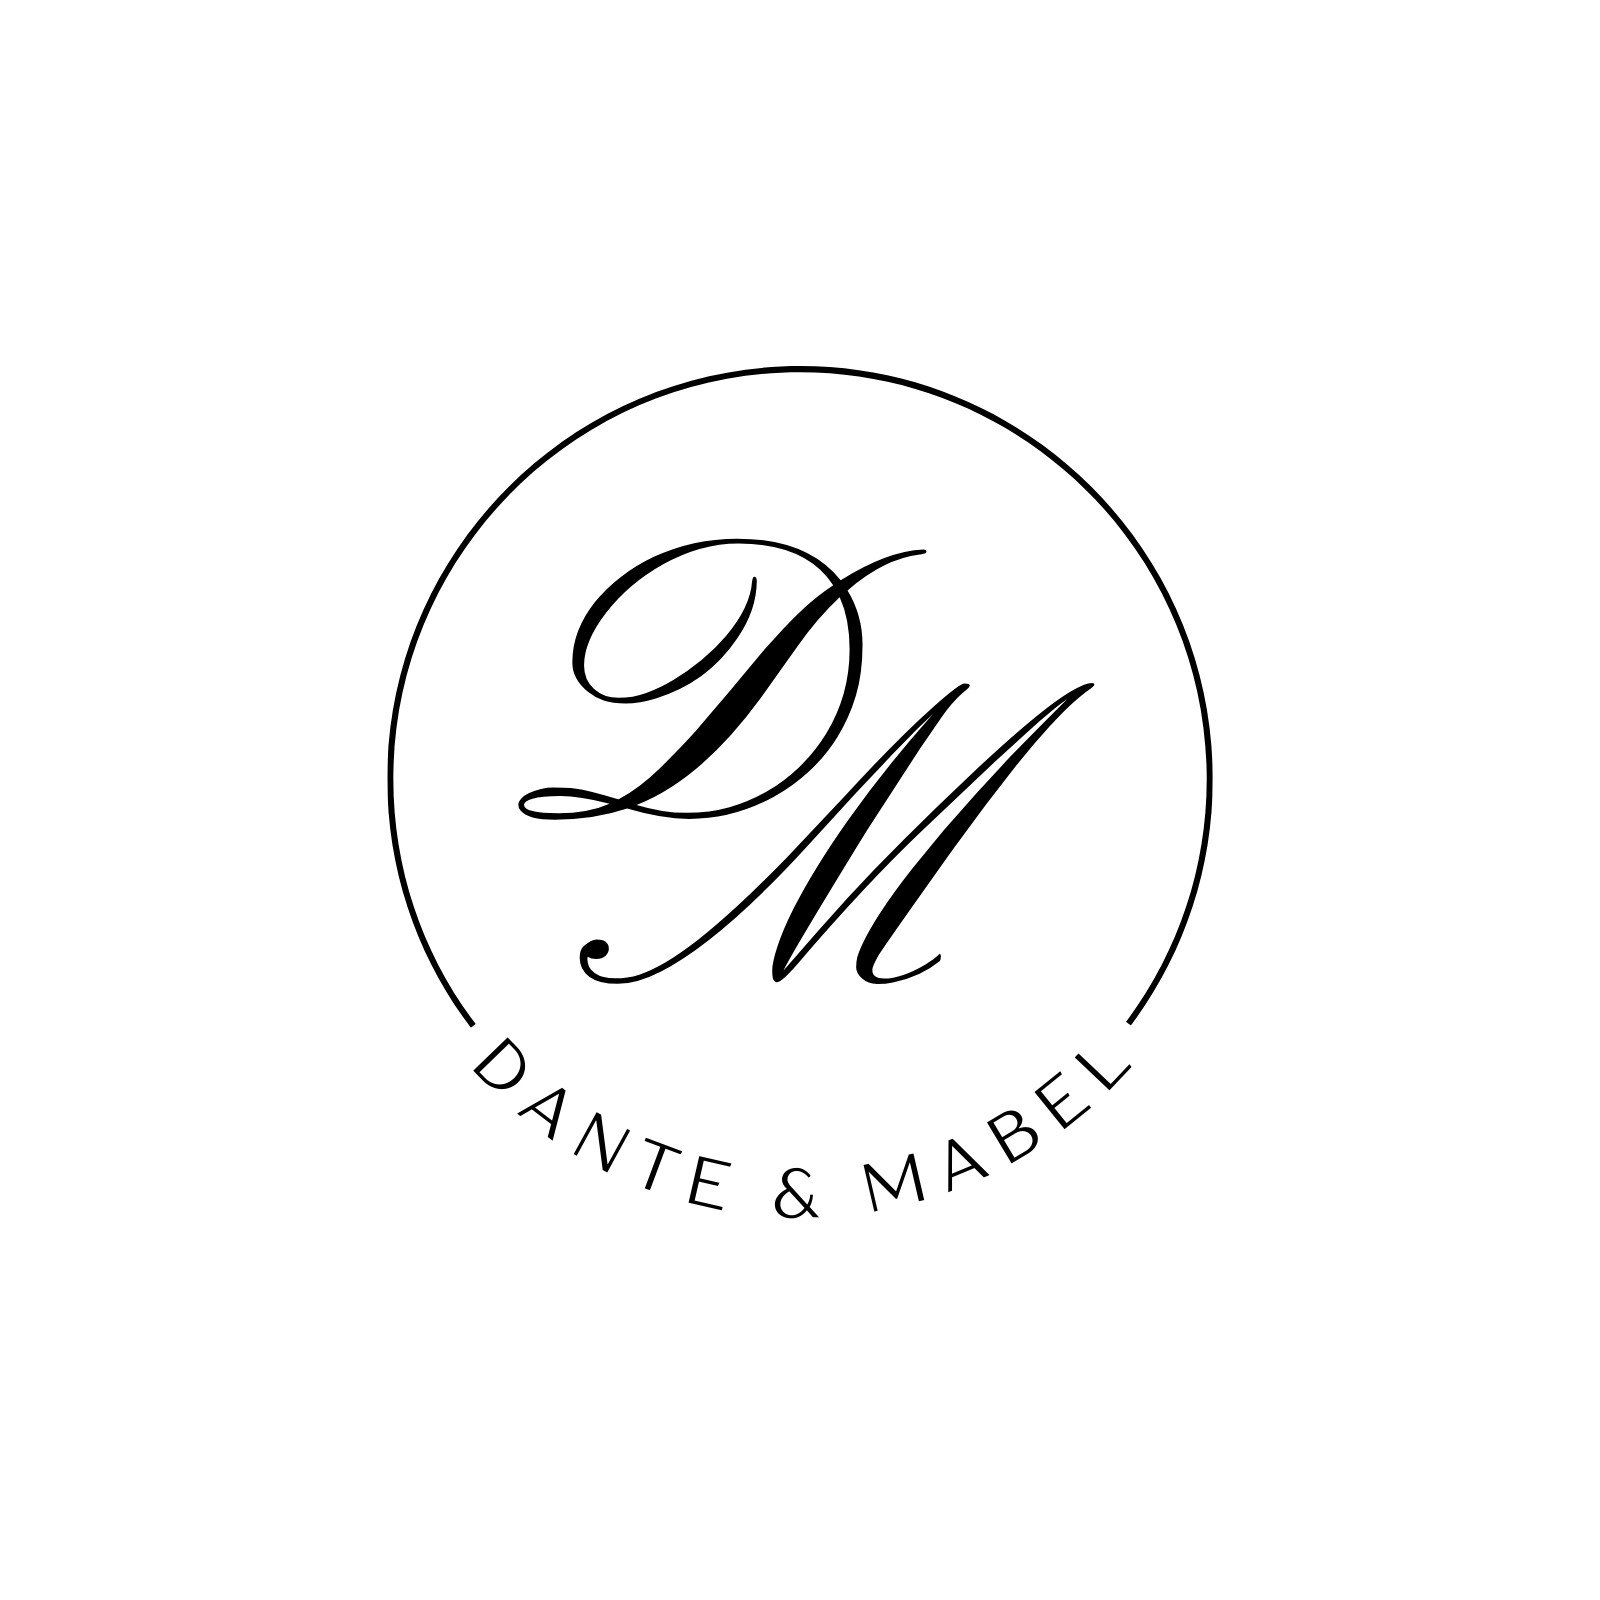 Initial letter PM wedding monogram logo design inspiration